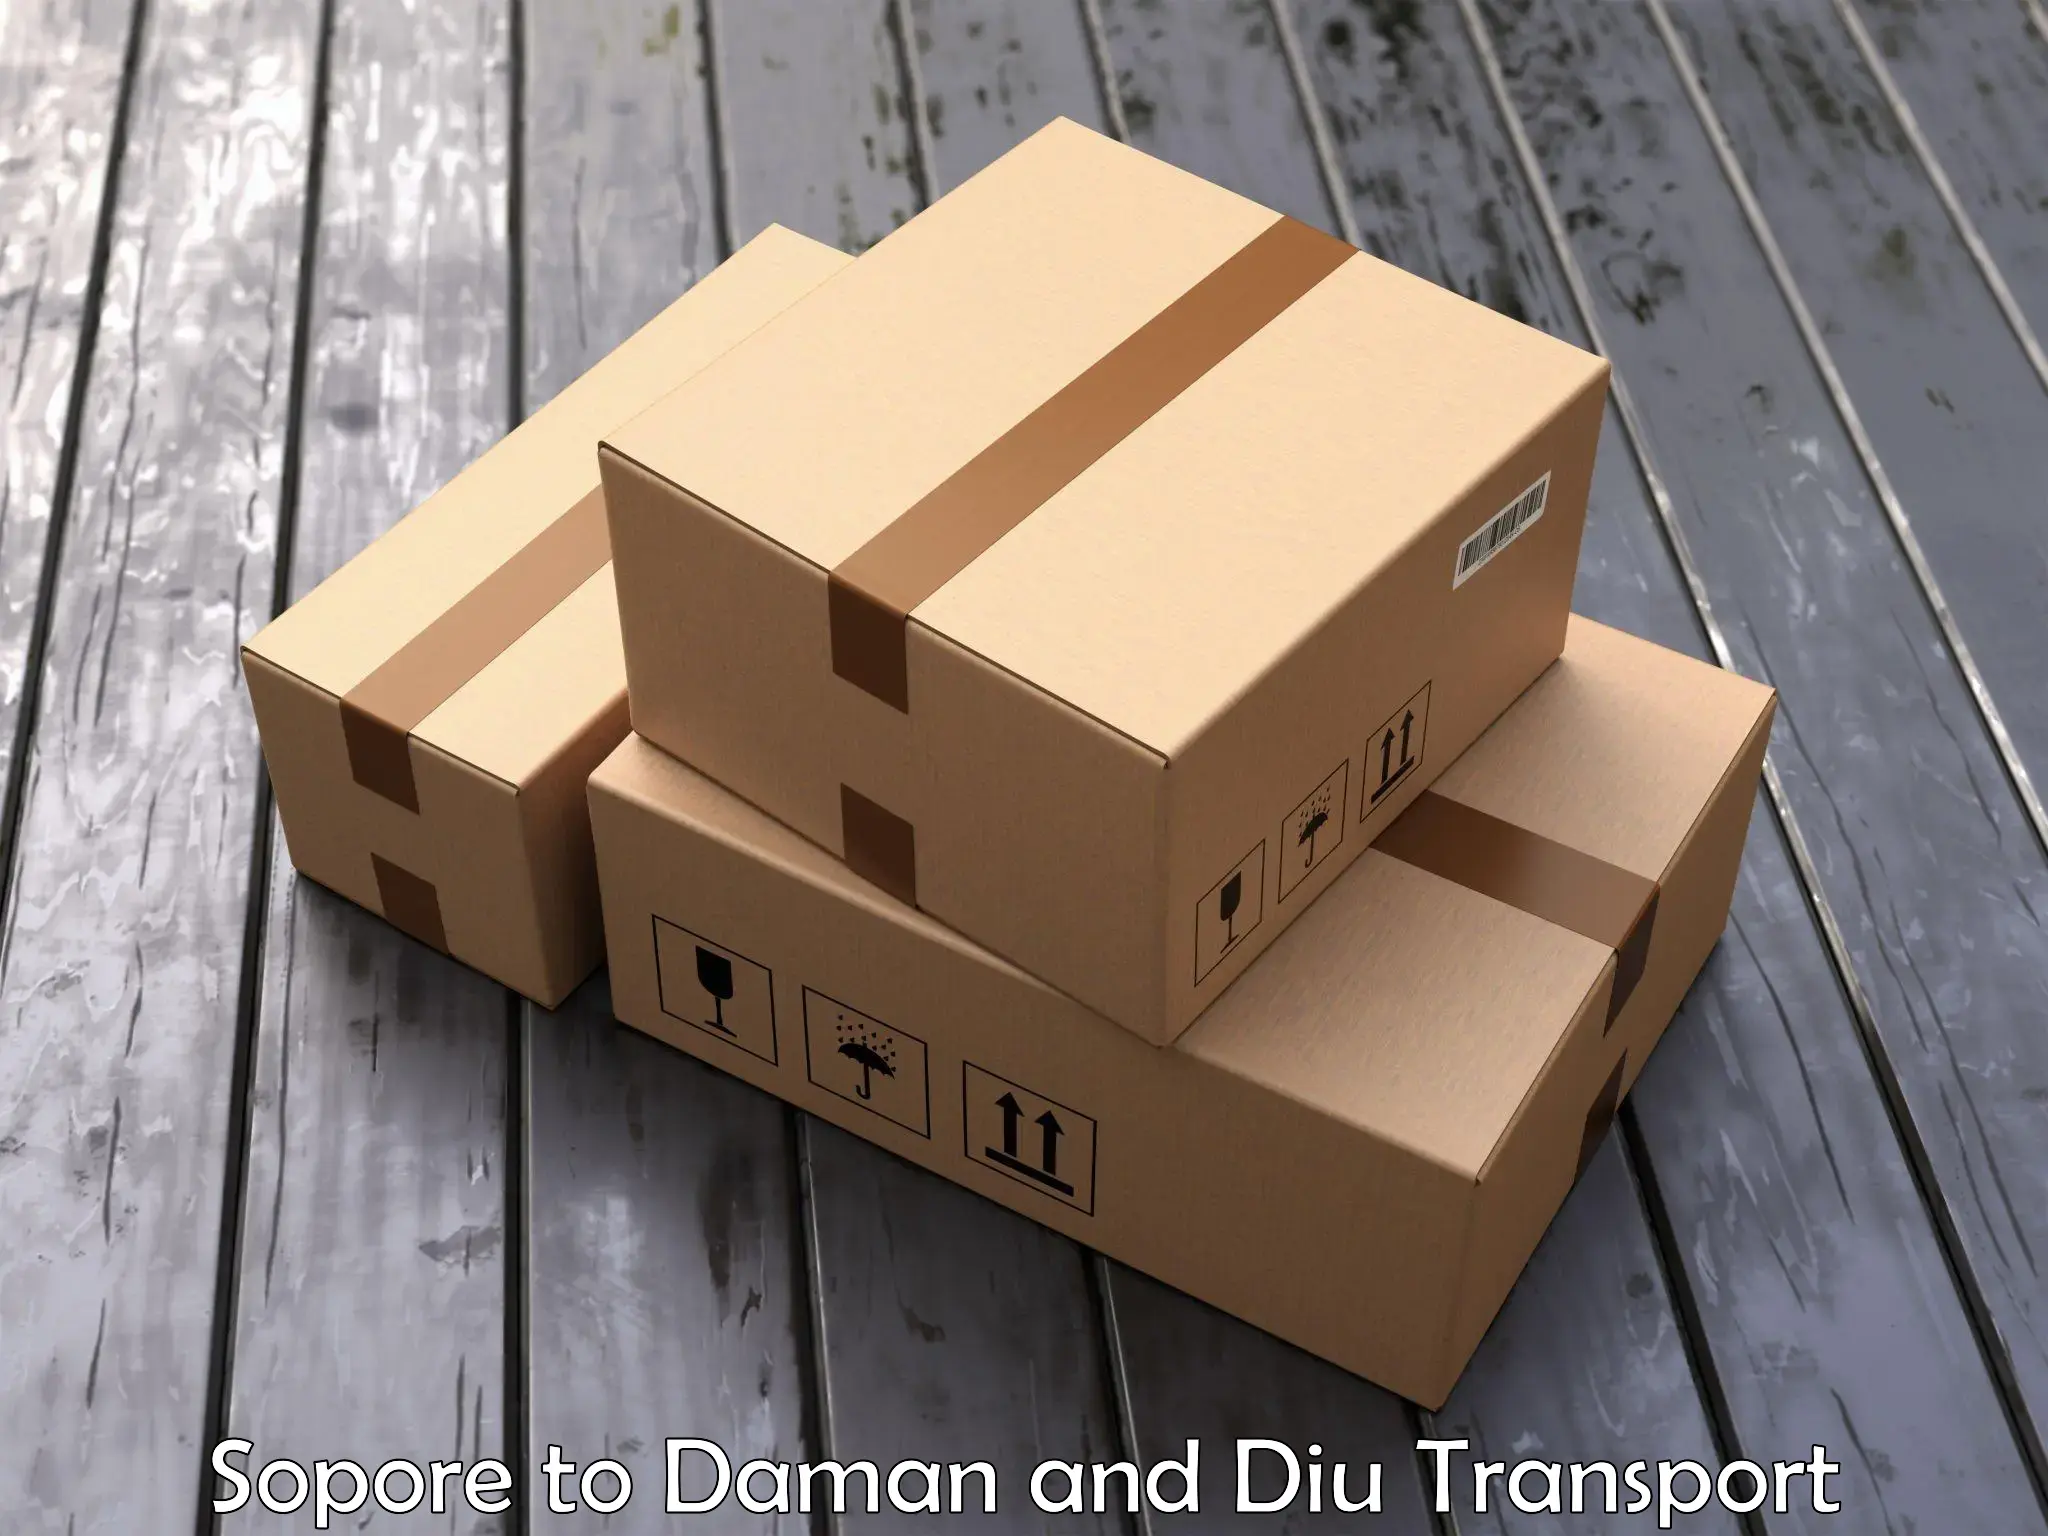 Vehicle parcel service Sopore to Daman